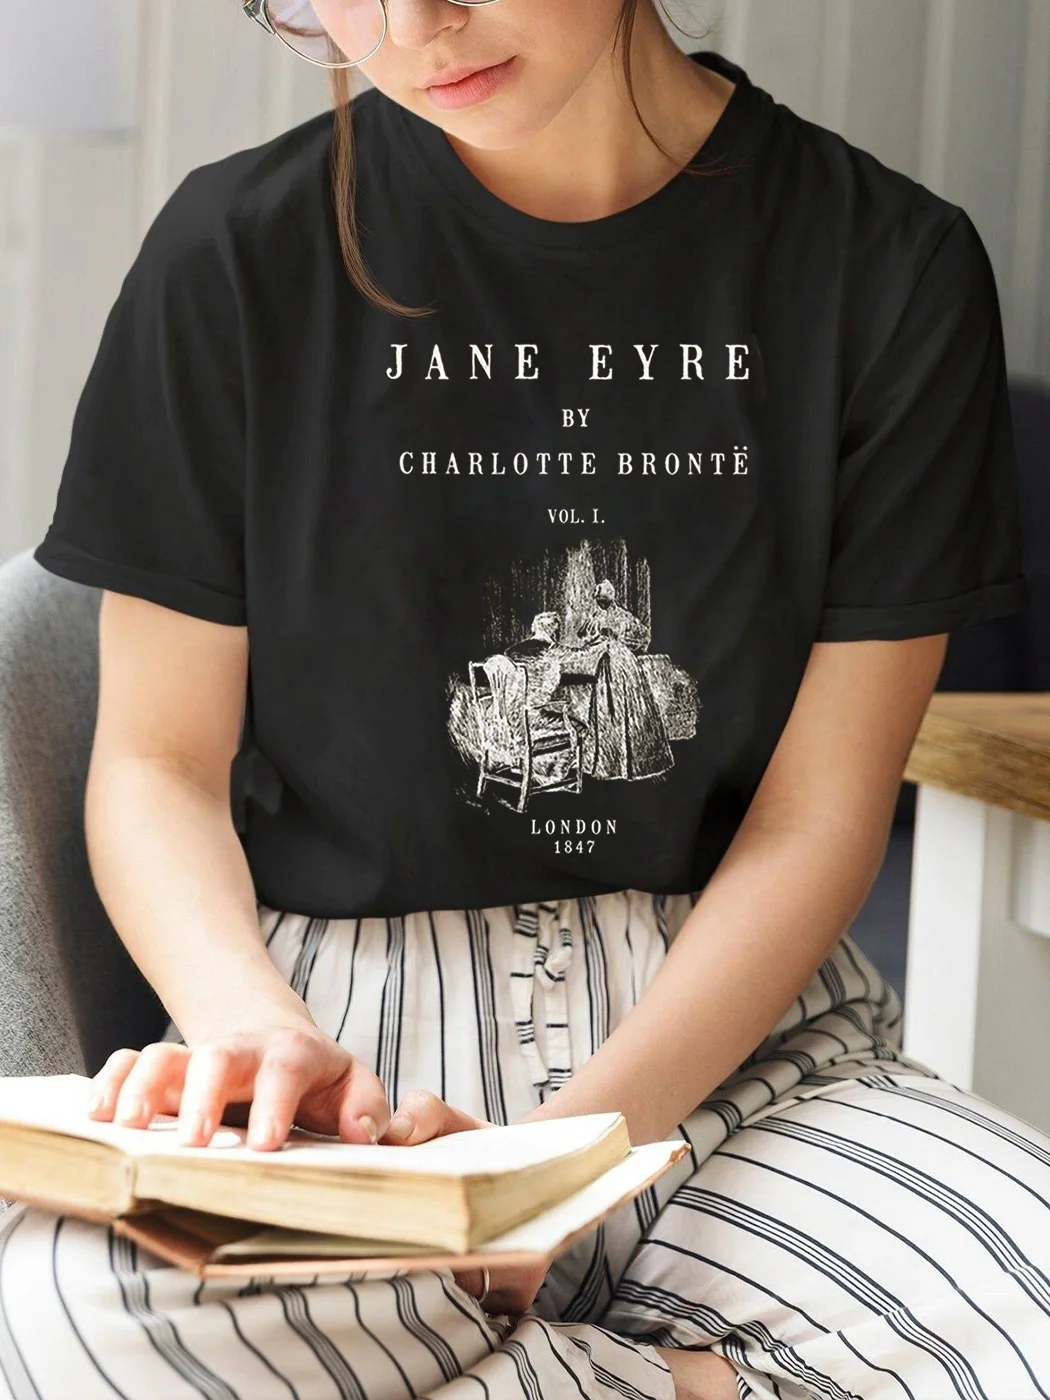 Jane Eyre Shirt, Charlotte Bronte Shirt, Jane Eyre T-shirt, Jane Eyre Gift / DarkAcademias /Darkacademias